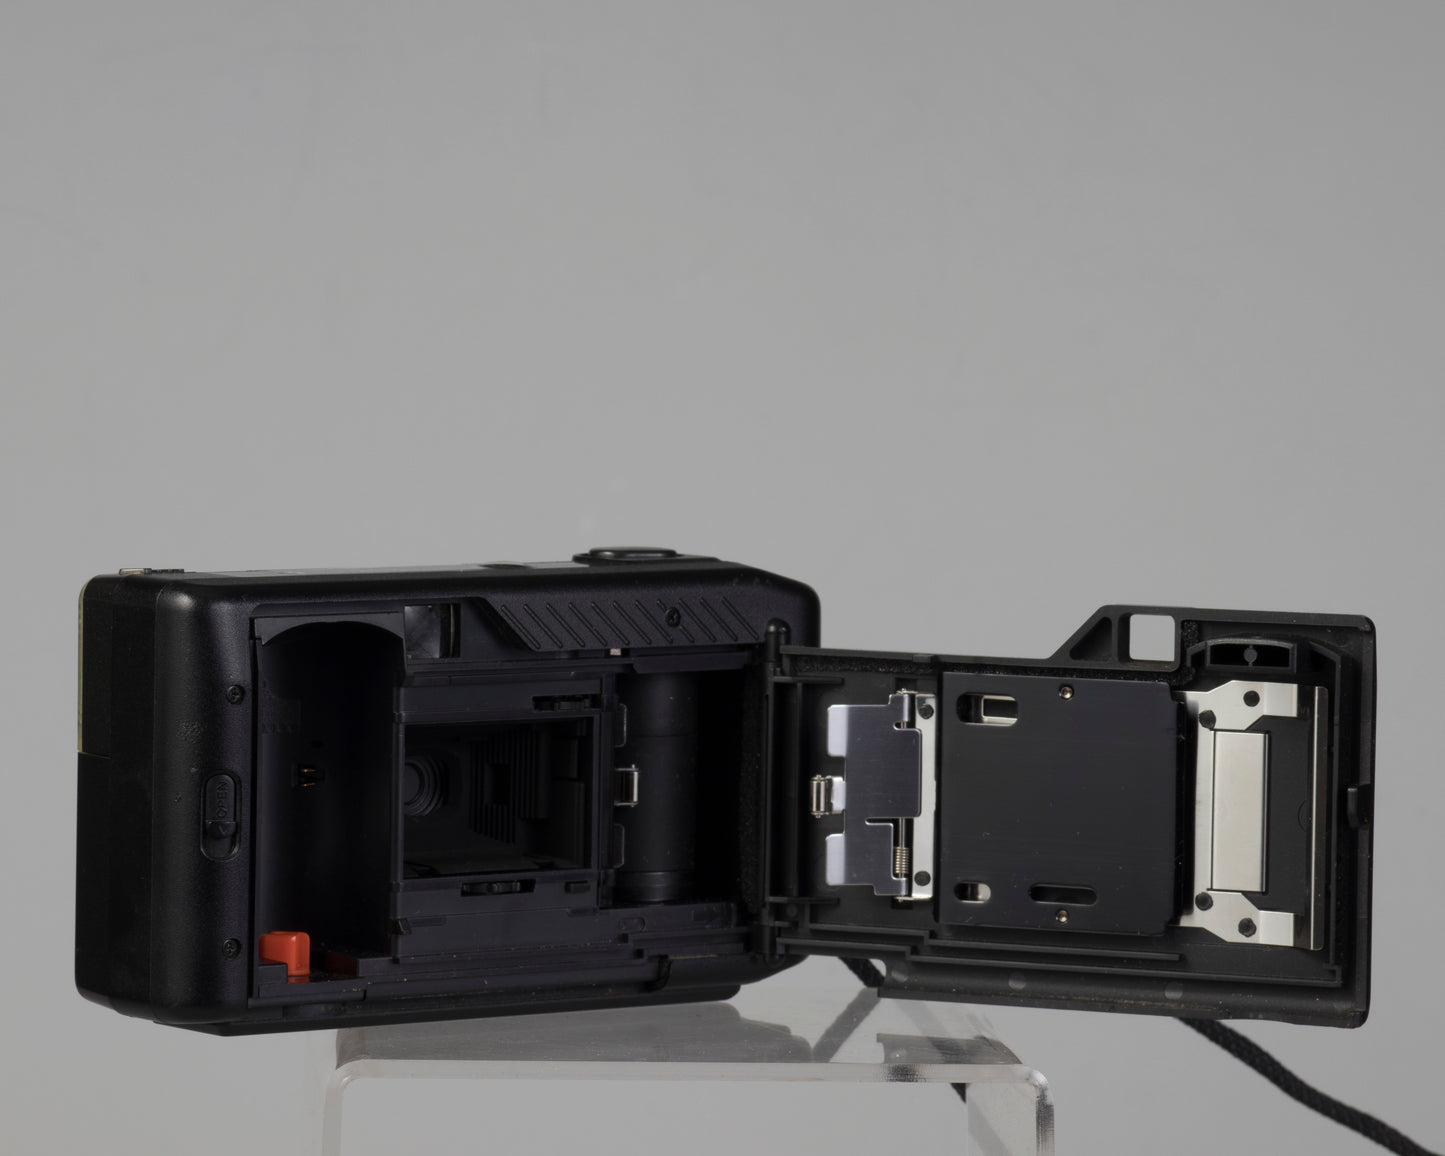 Canon Snappy S 35mm camera (serial 2071894)